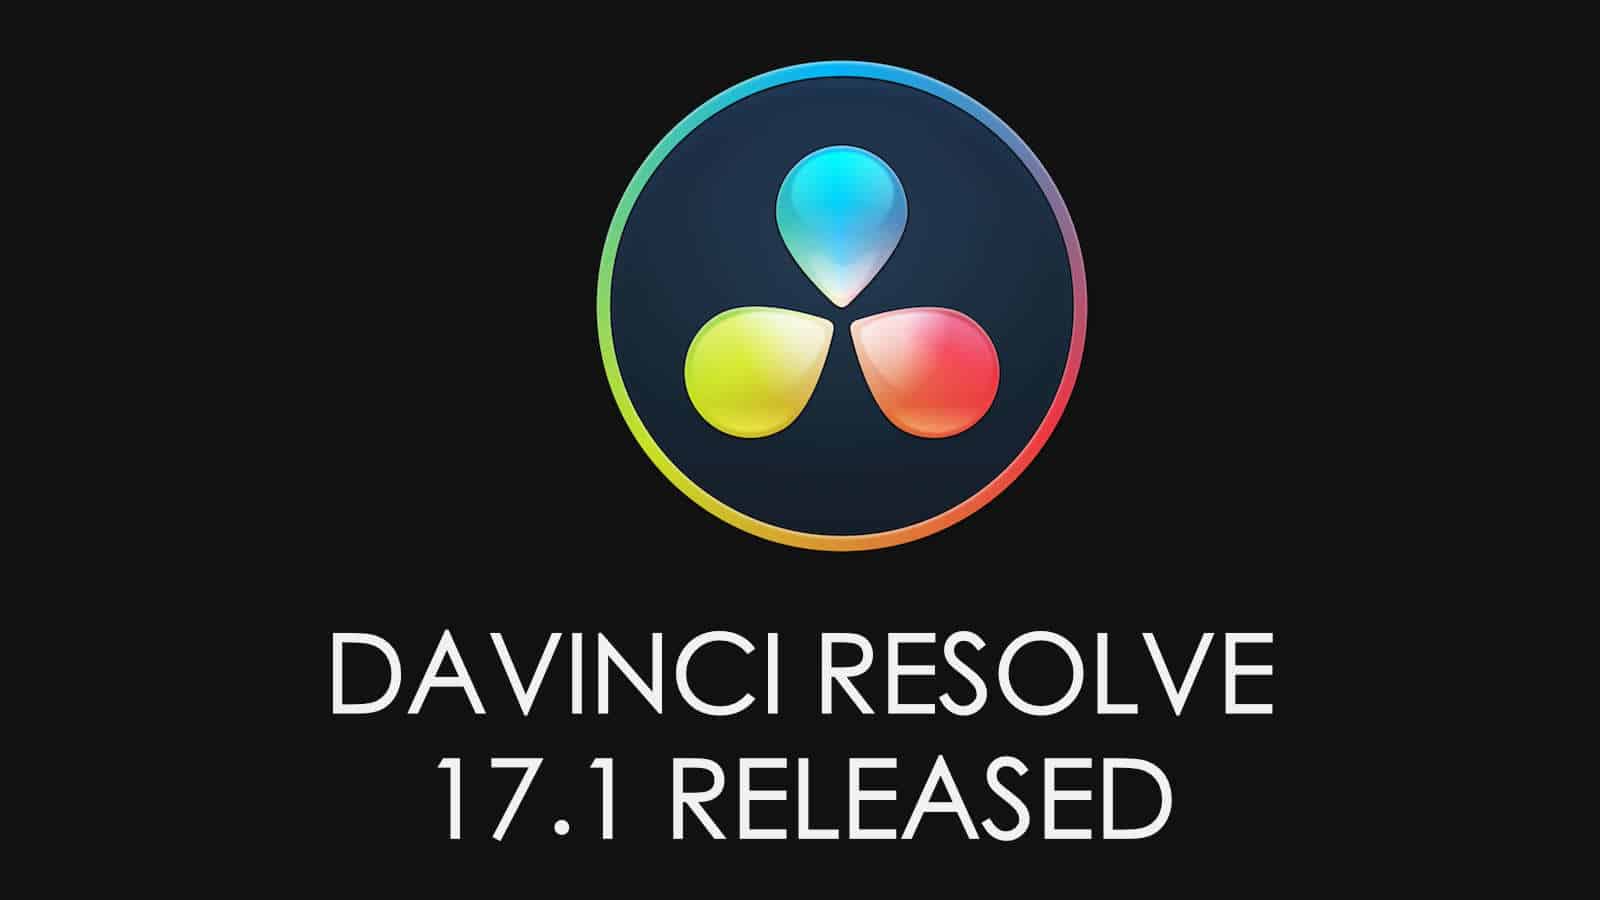 davinci resolve 18.5 download free